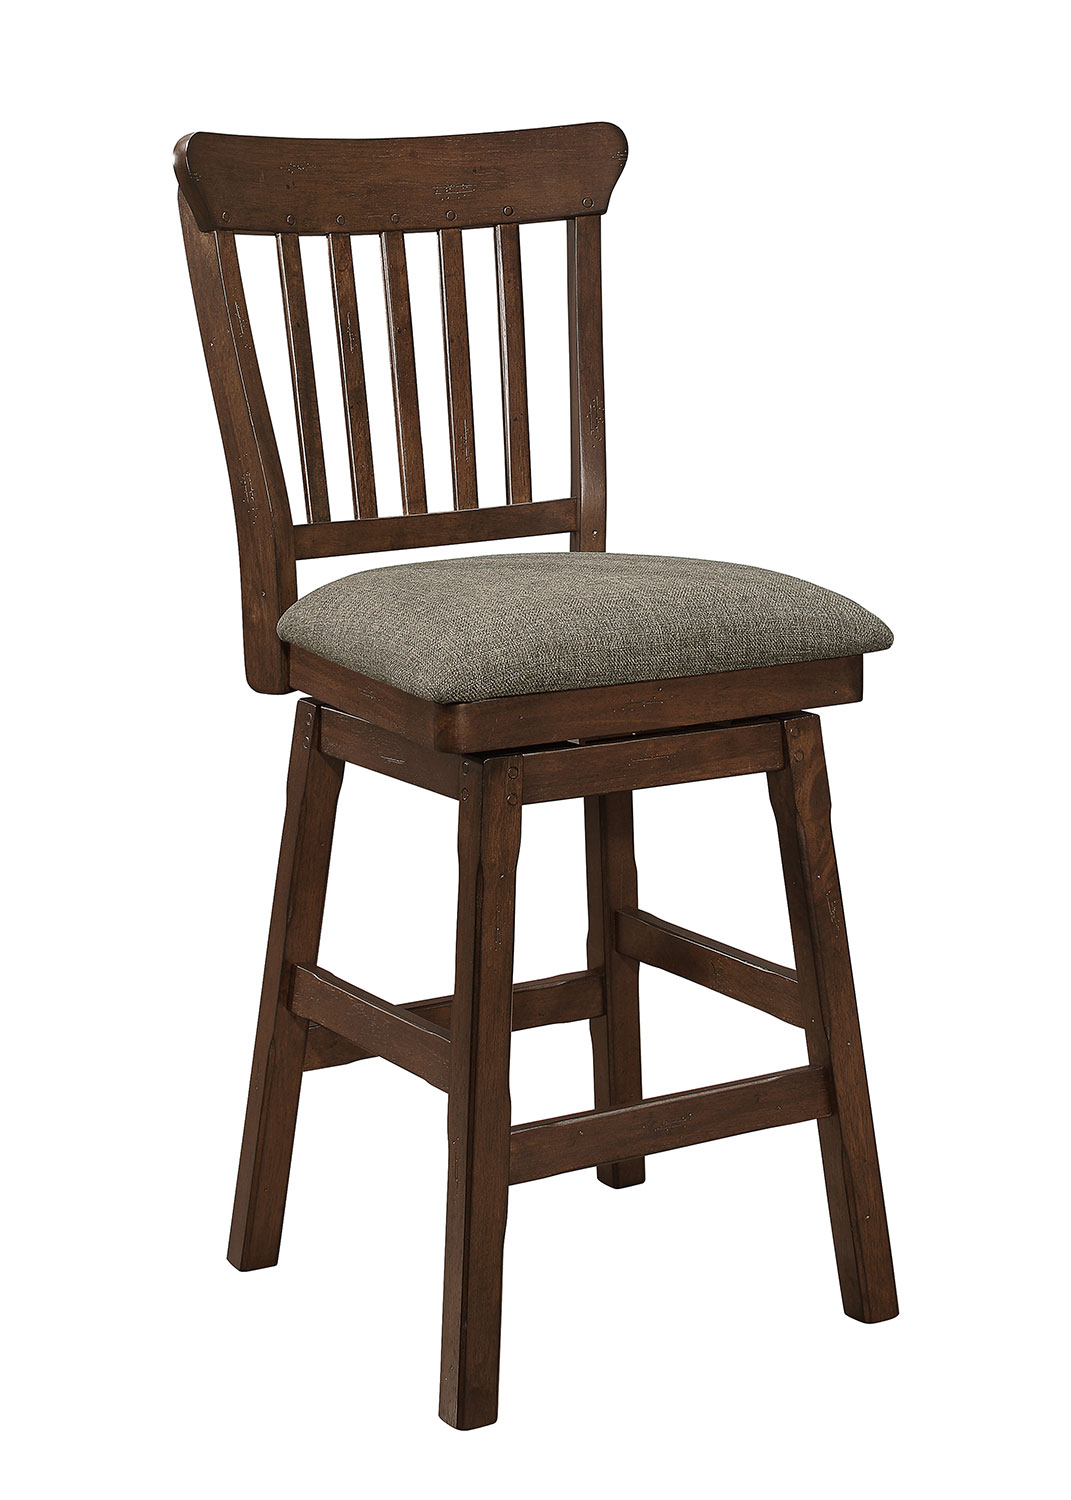 Homelegance Schleiger Swivel Counter Height Chair - Dark Brown